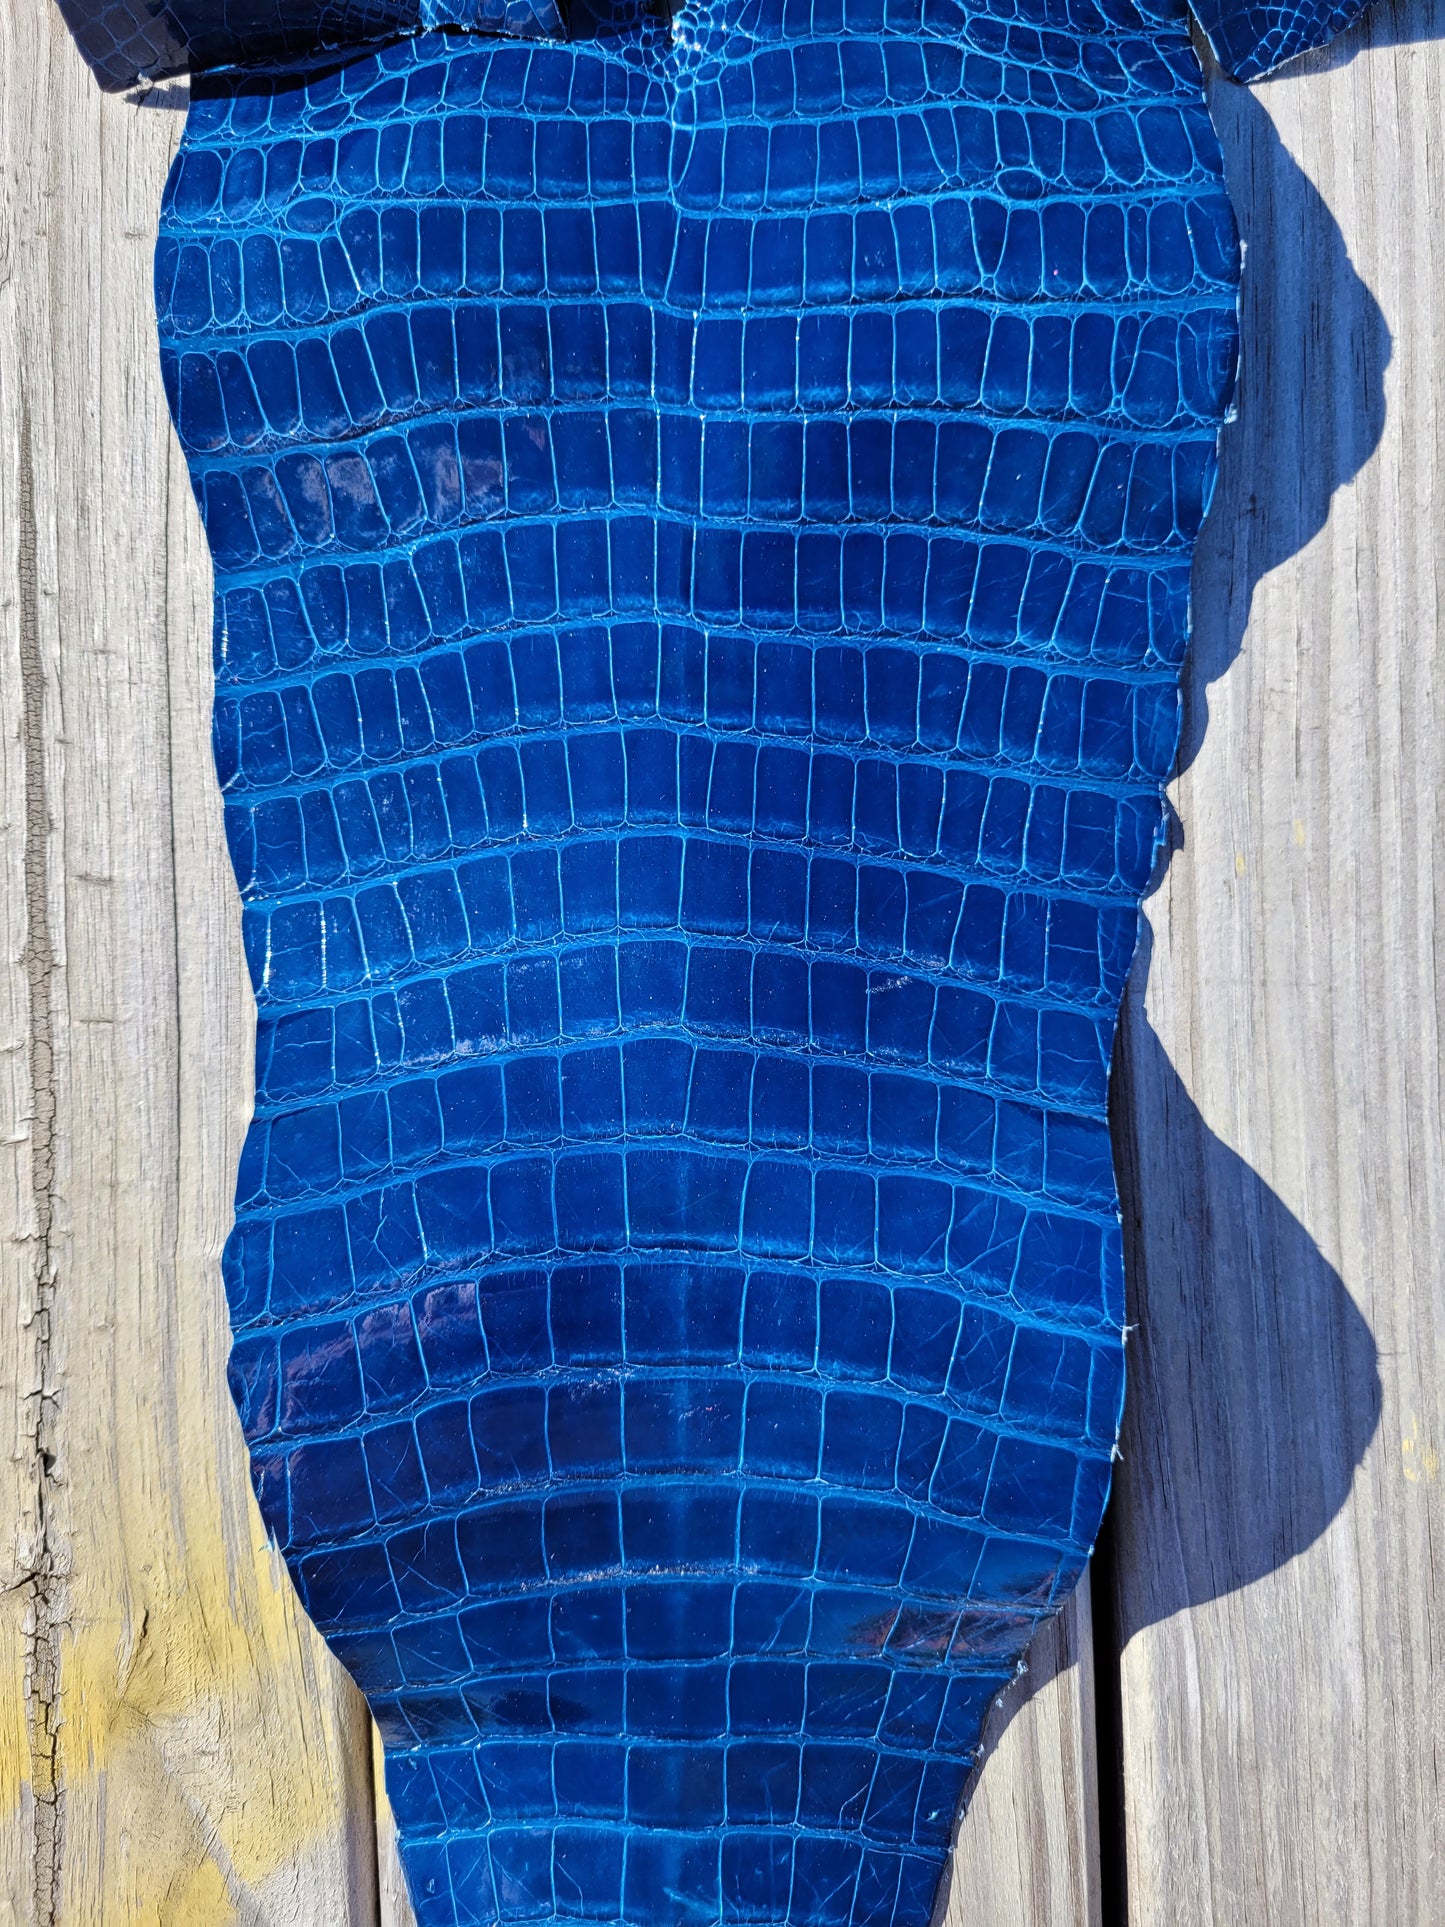 Alligator Skin - 24cm- Grade 1/2 Electric Blue (Glazed)